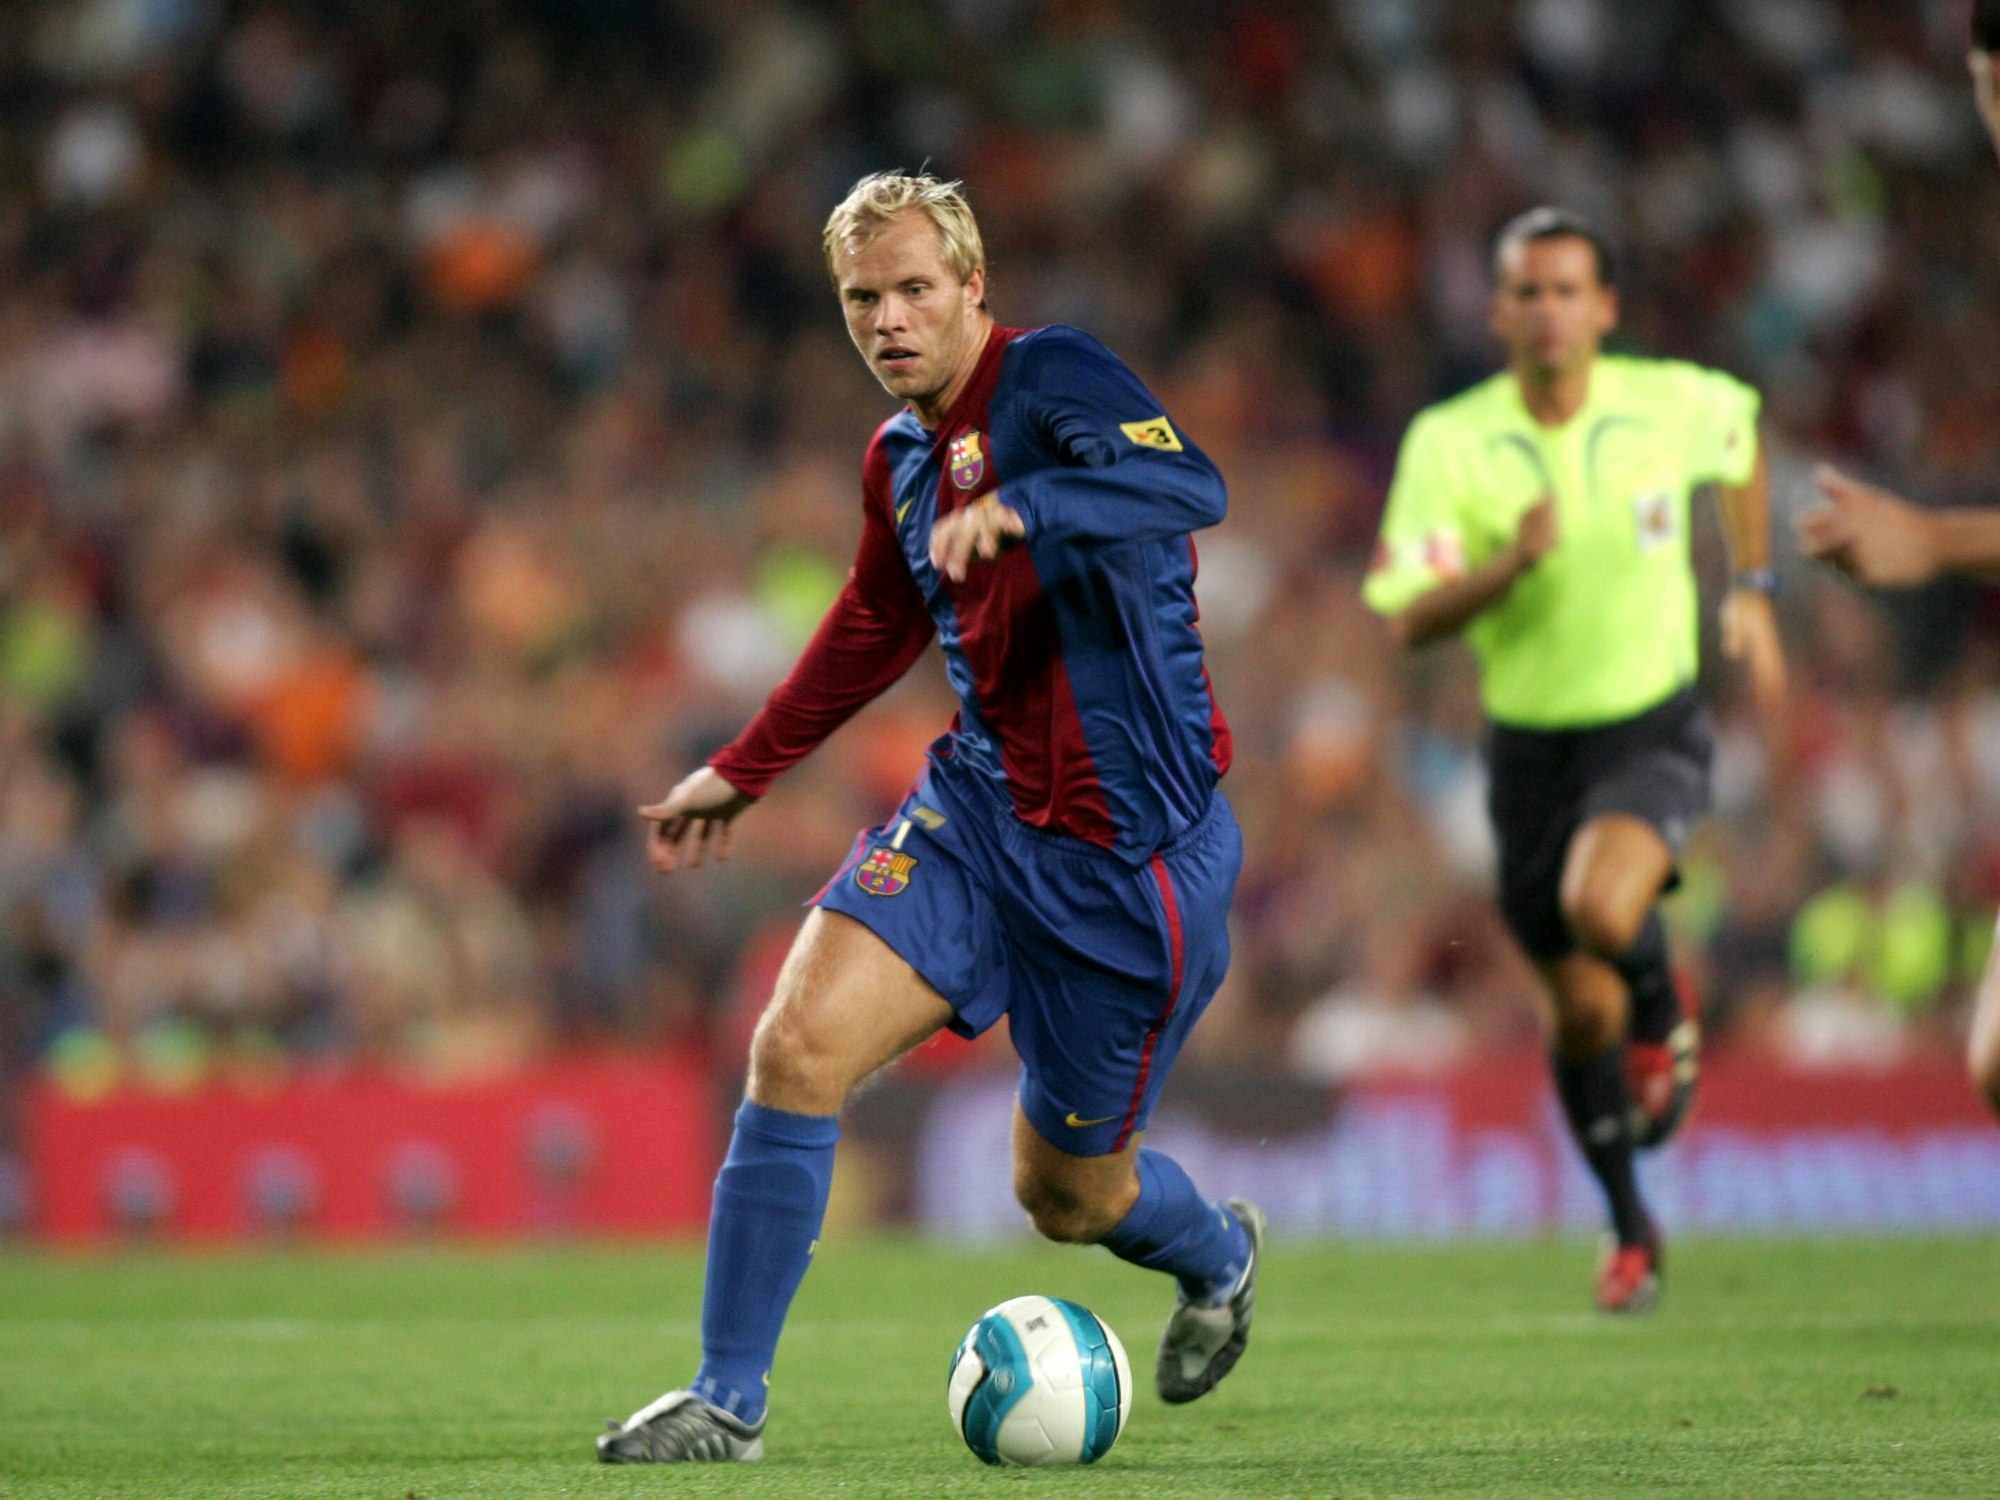 Eidur Gudjohnsen dribbelt mit dem Ball am Fuß im Trikot des FC Barcelona